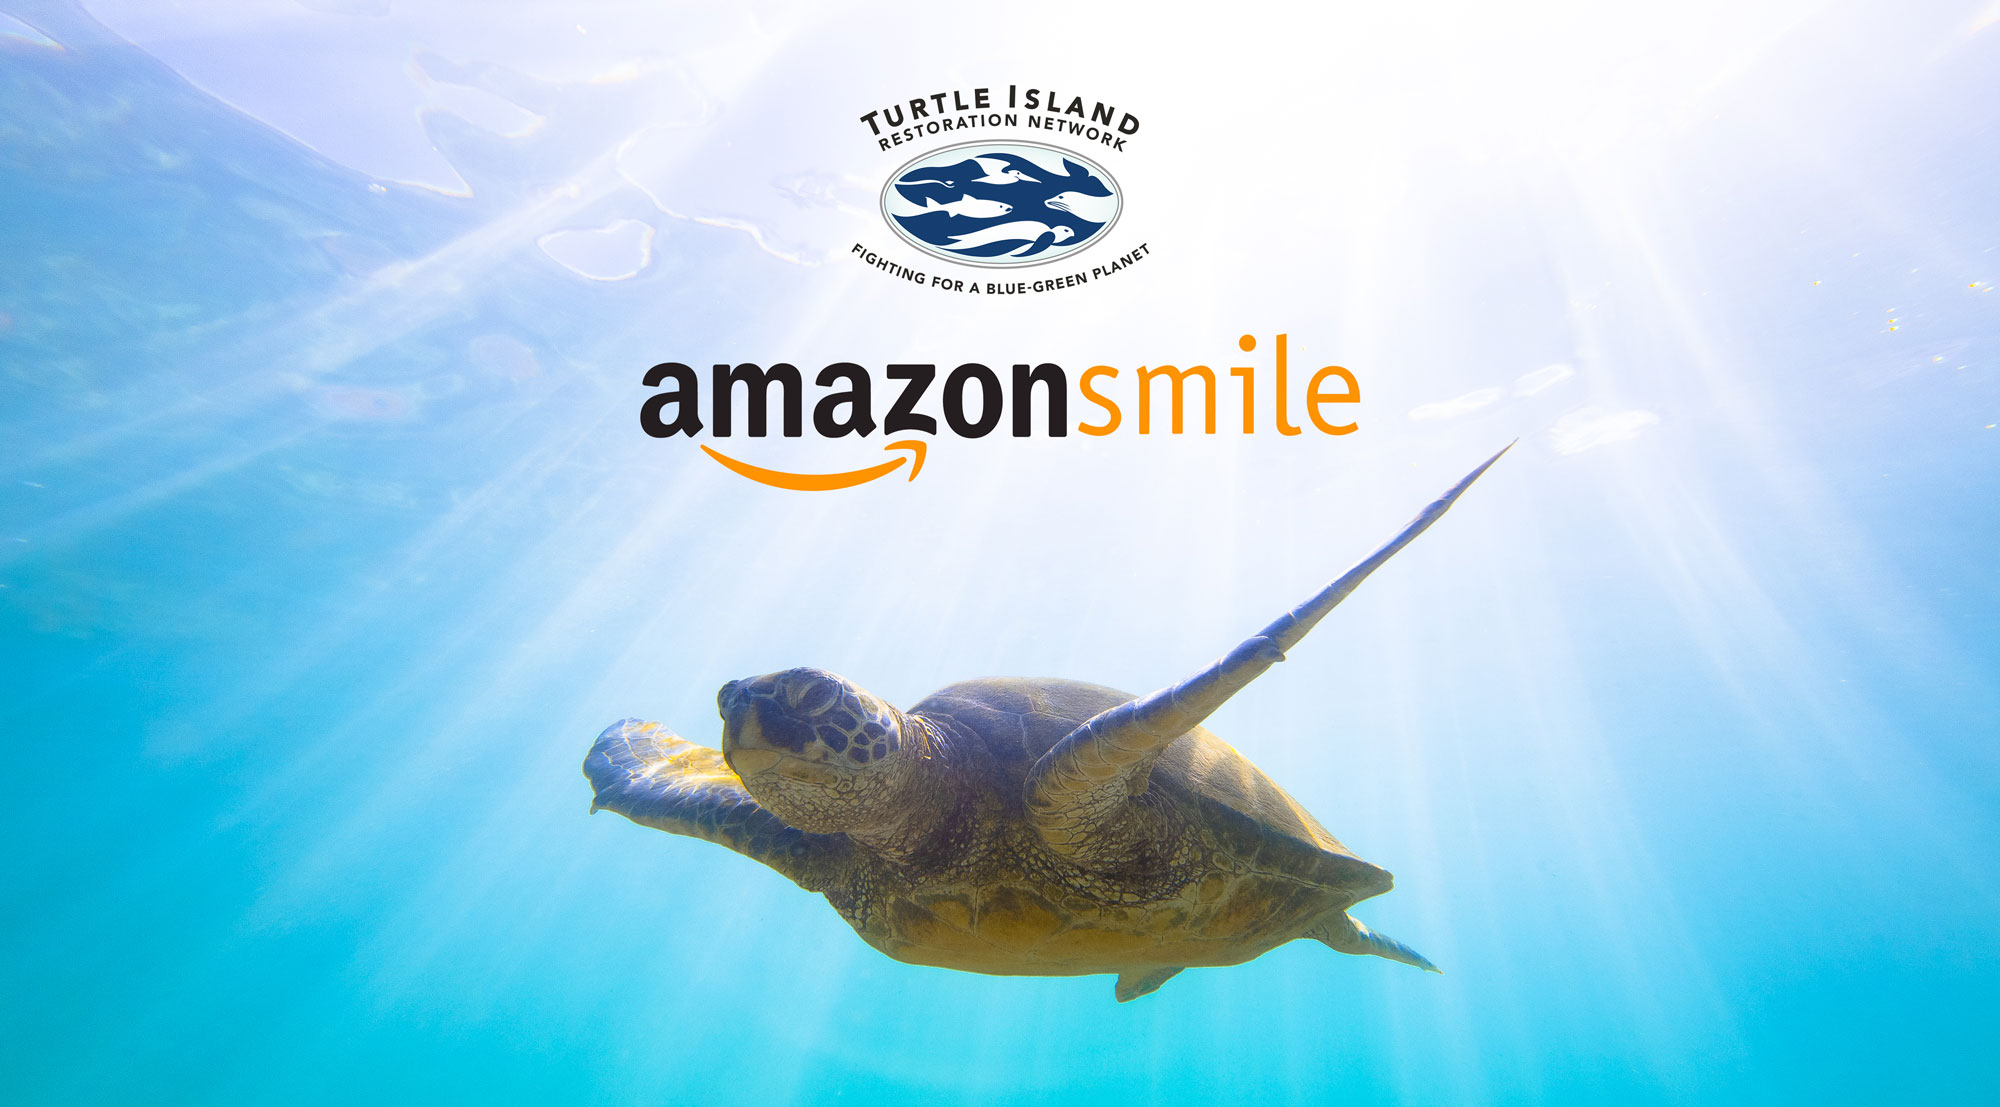 Shop Online. Save Sea Turtles.